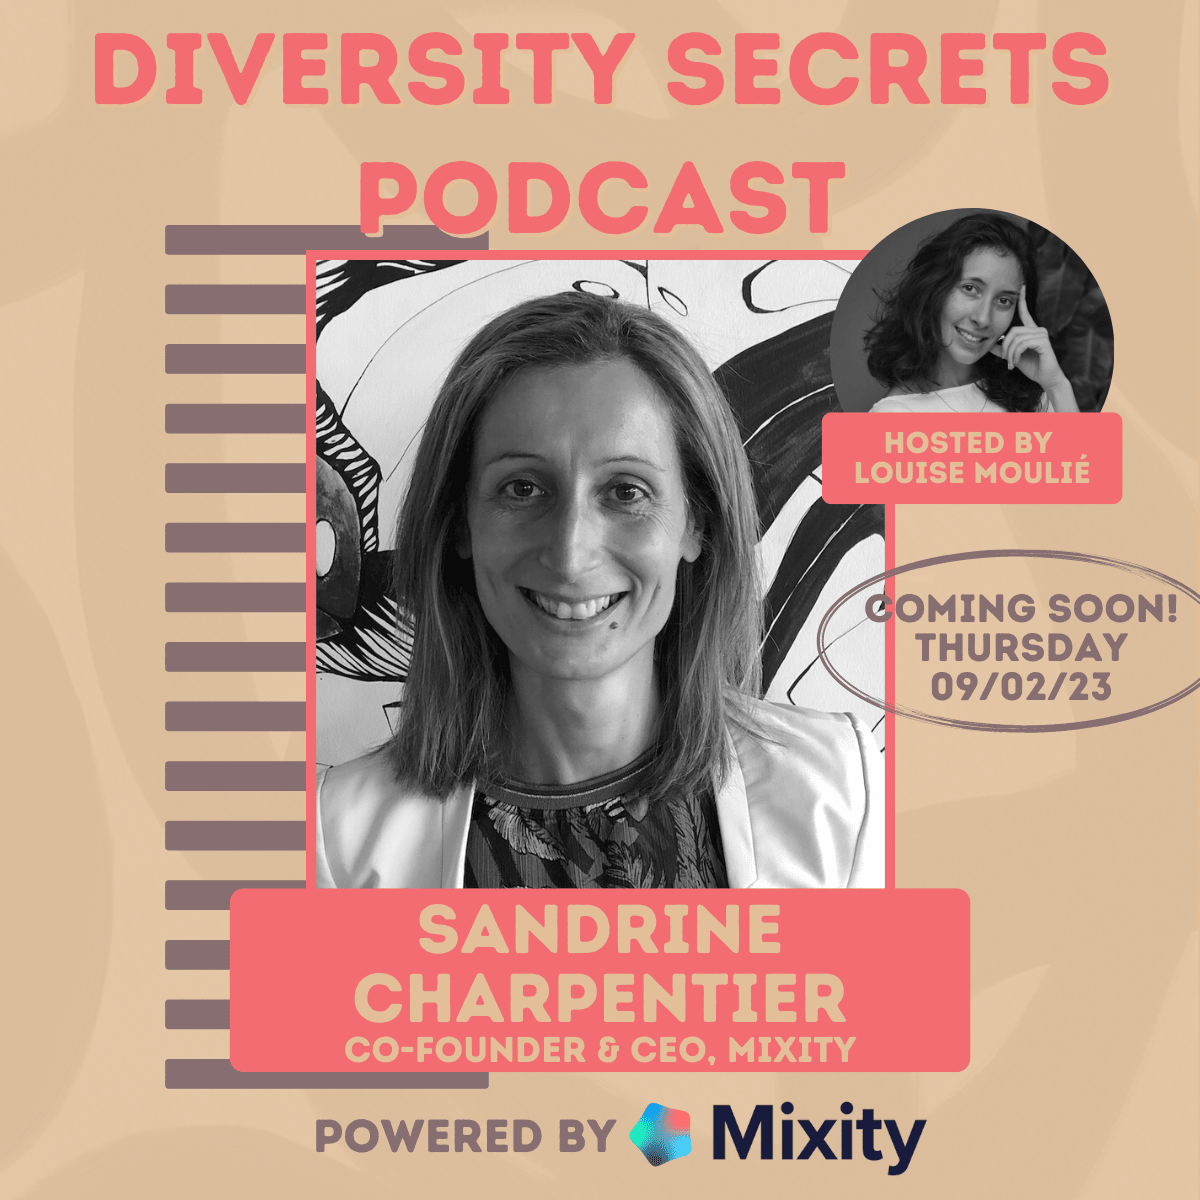 🎙️ Sandrine Charpentier - CEO Mixity in Diversity Secrets Podcast